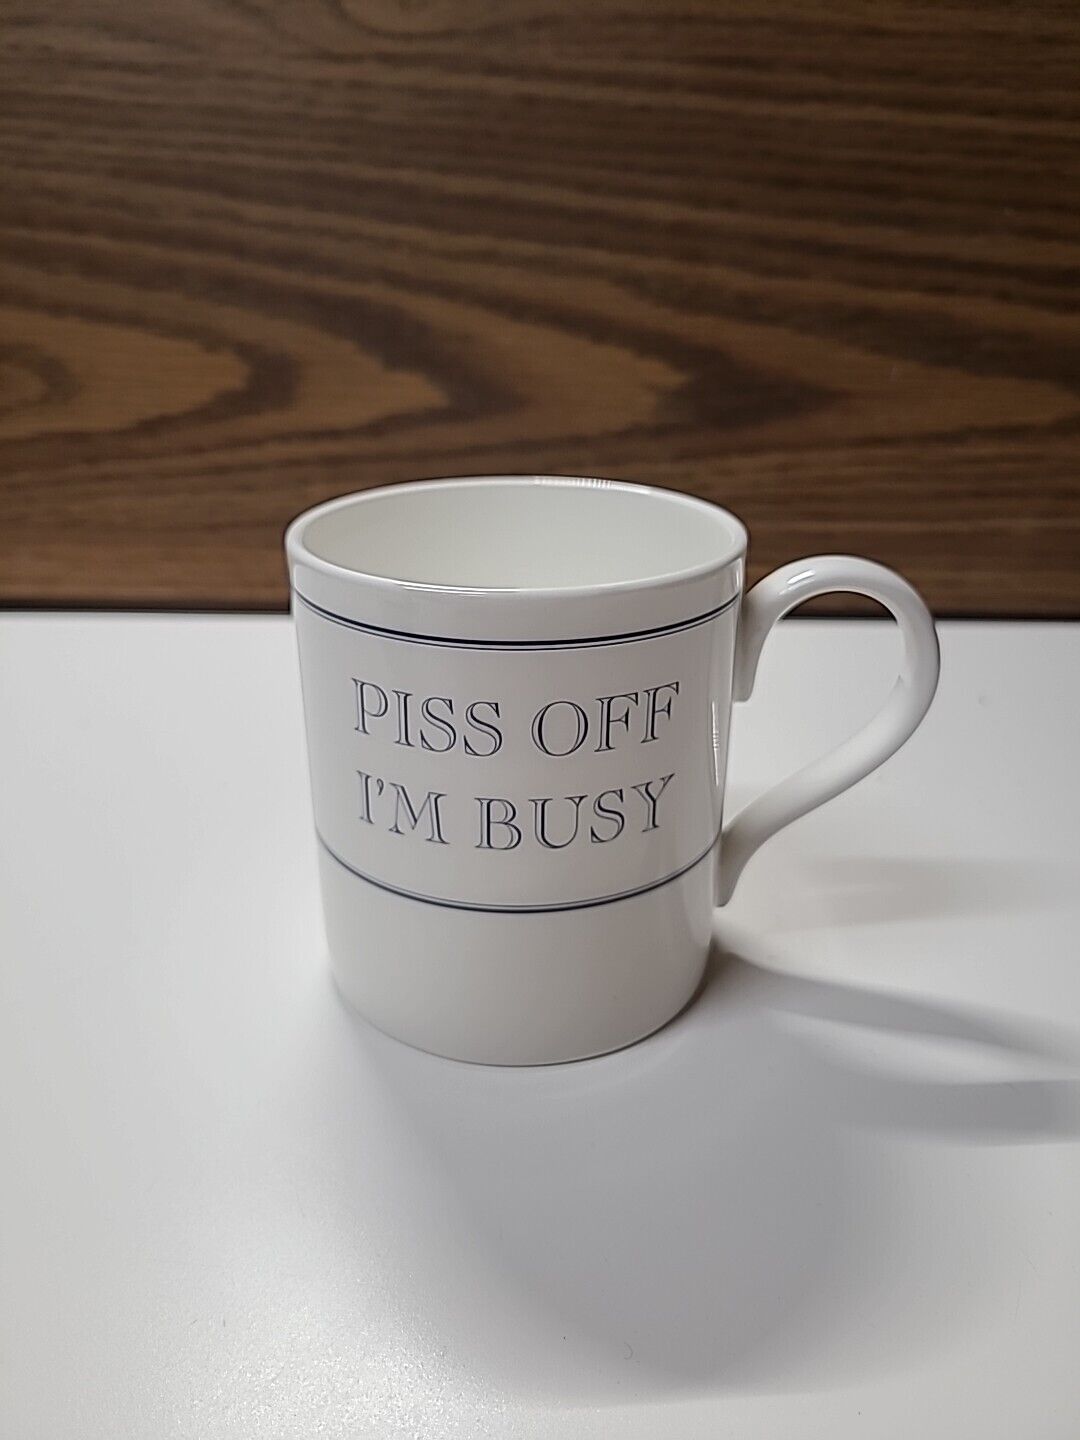 Stubbs Mugs “Piss off I’m Busy” Bone China Coffee Mug Cup